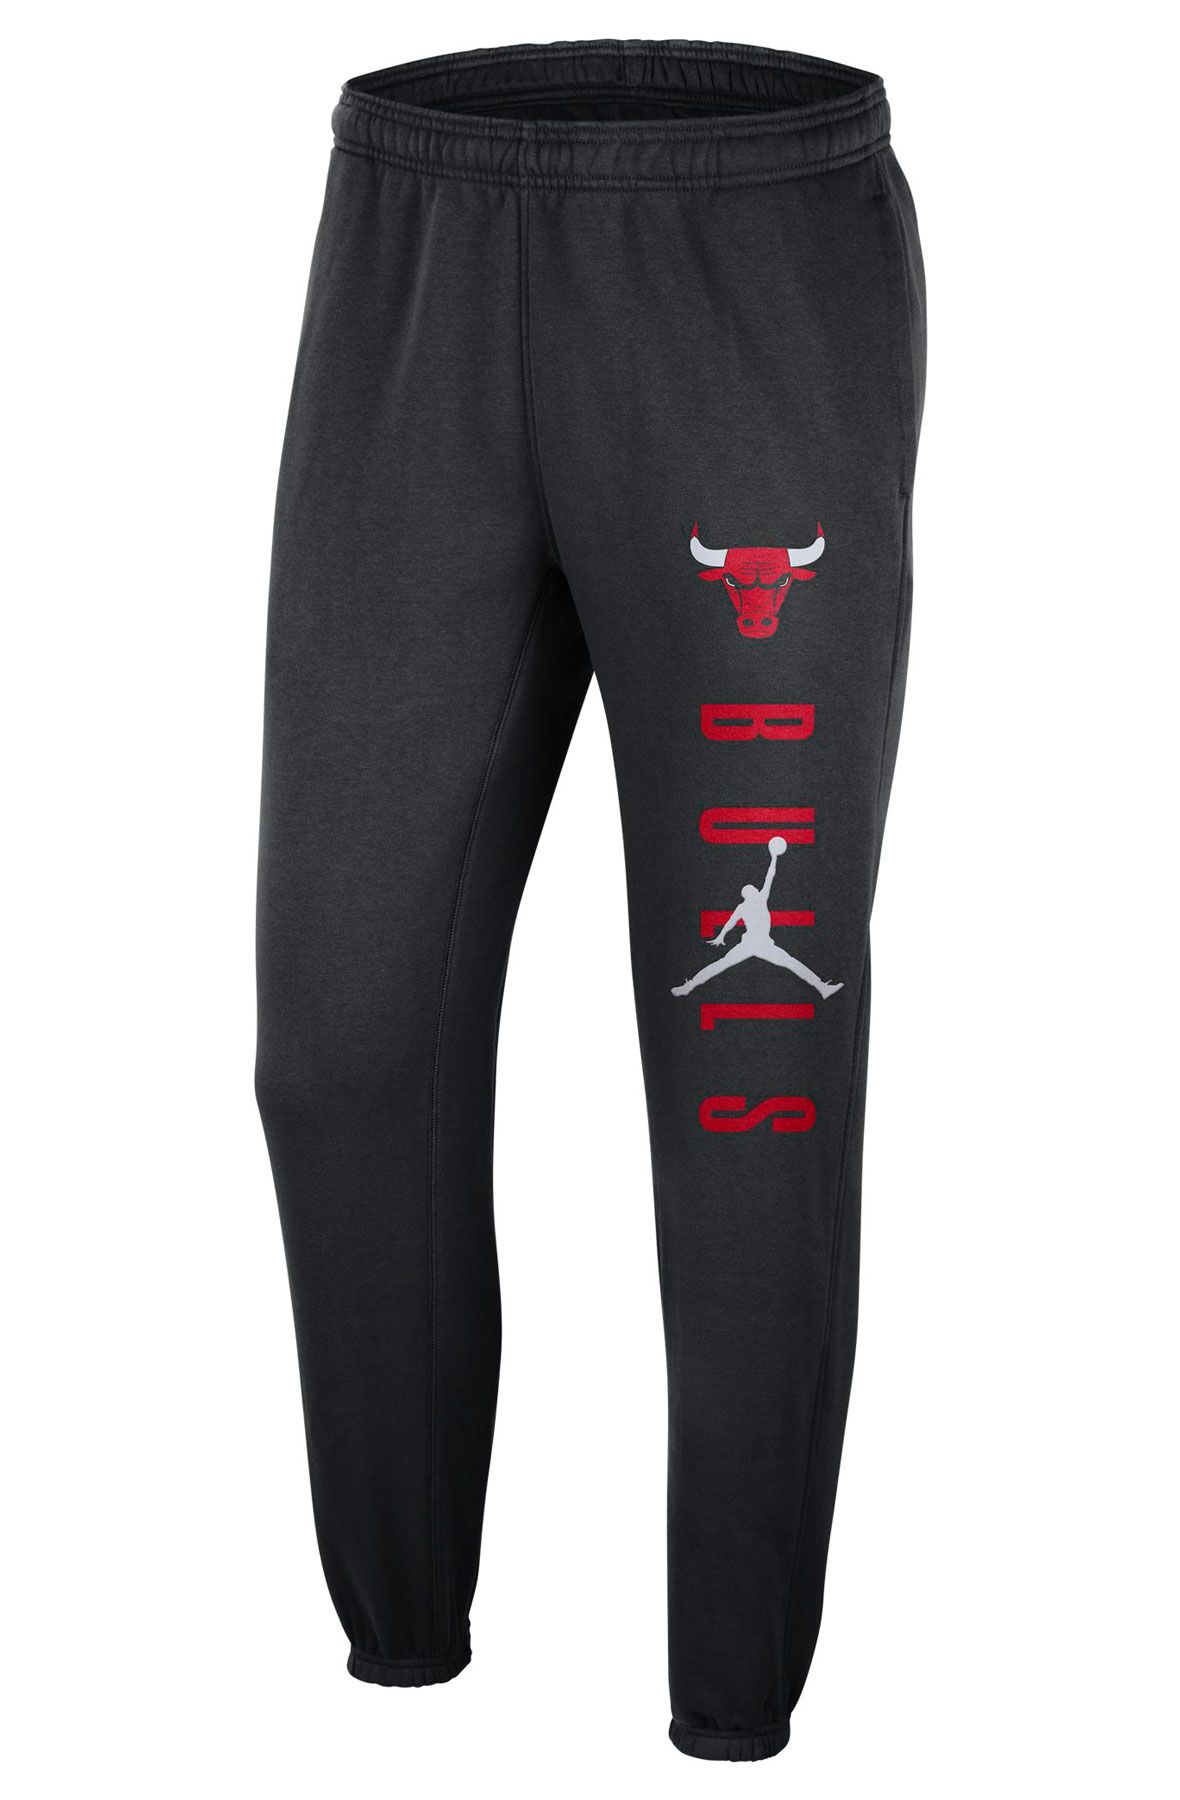 Statement Courtside Pants - Black - Jordan – Utah Jazz Team Store